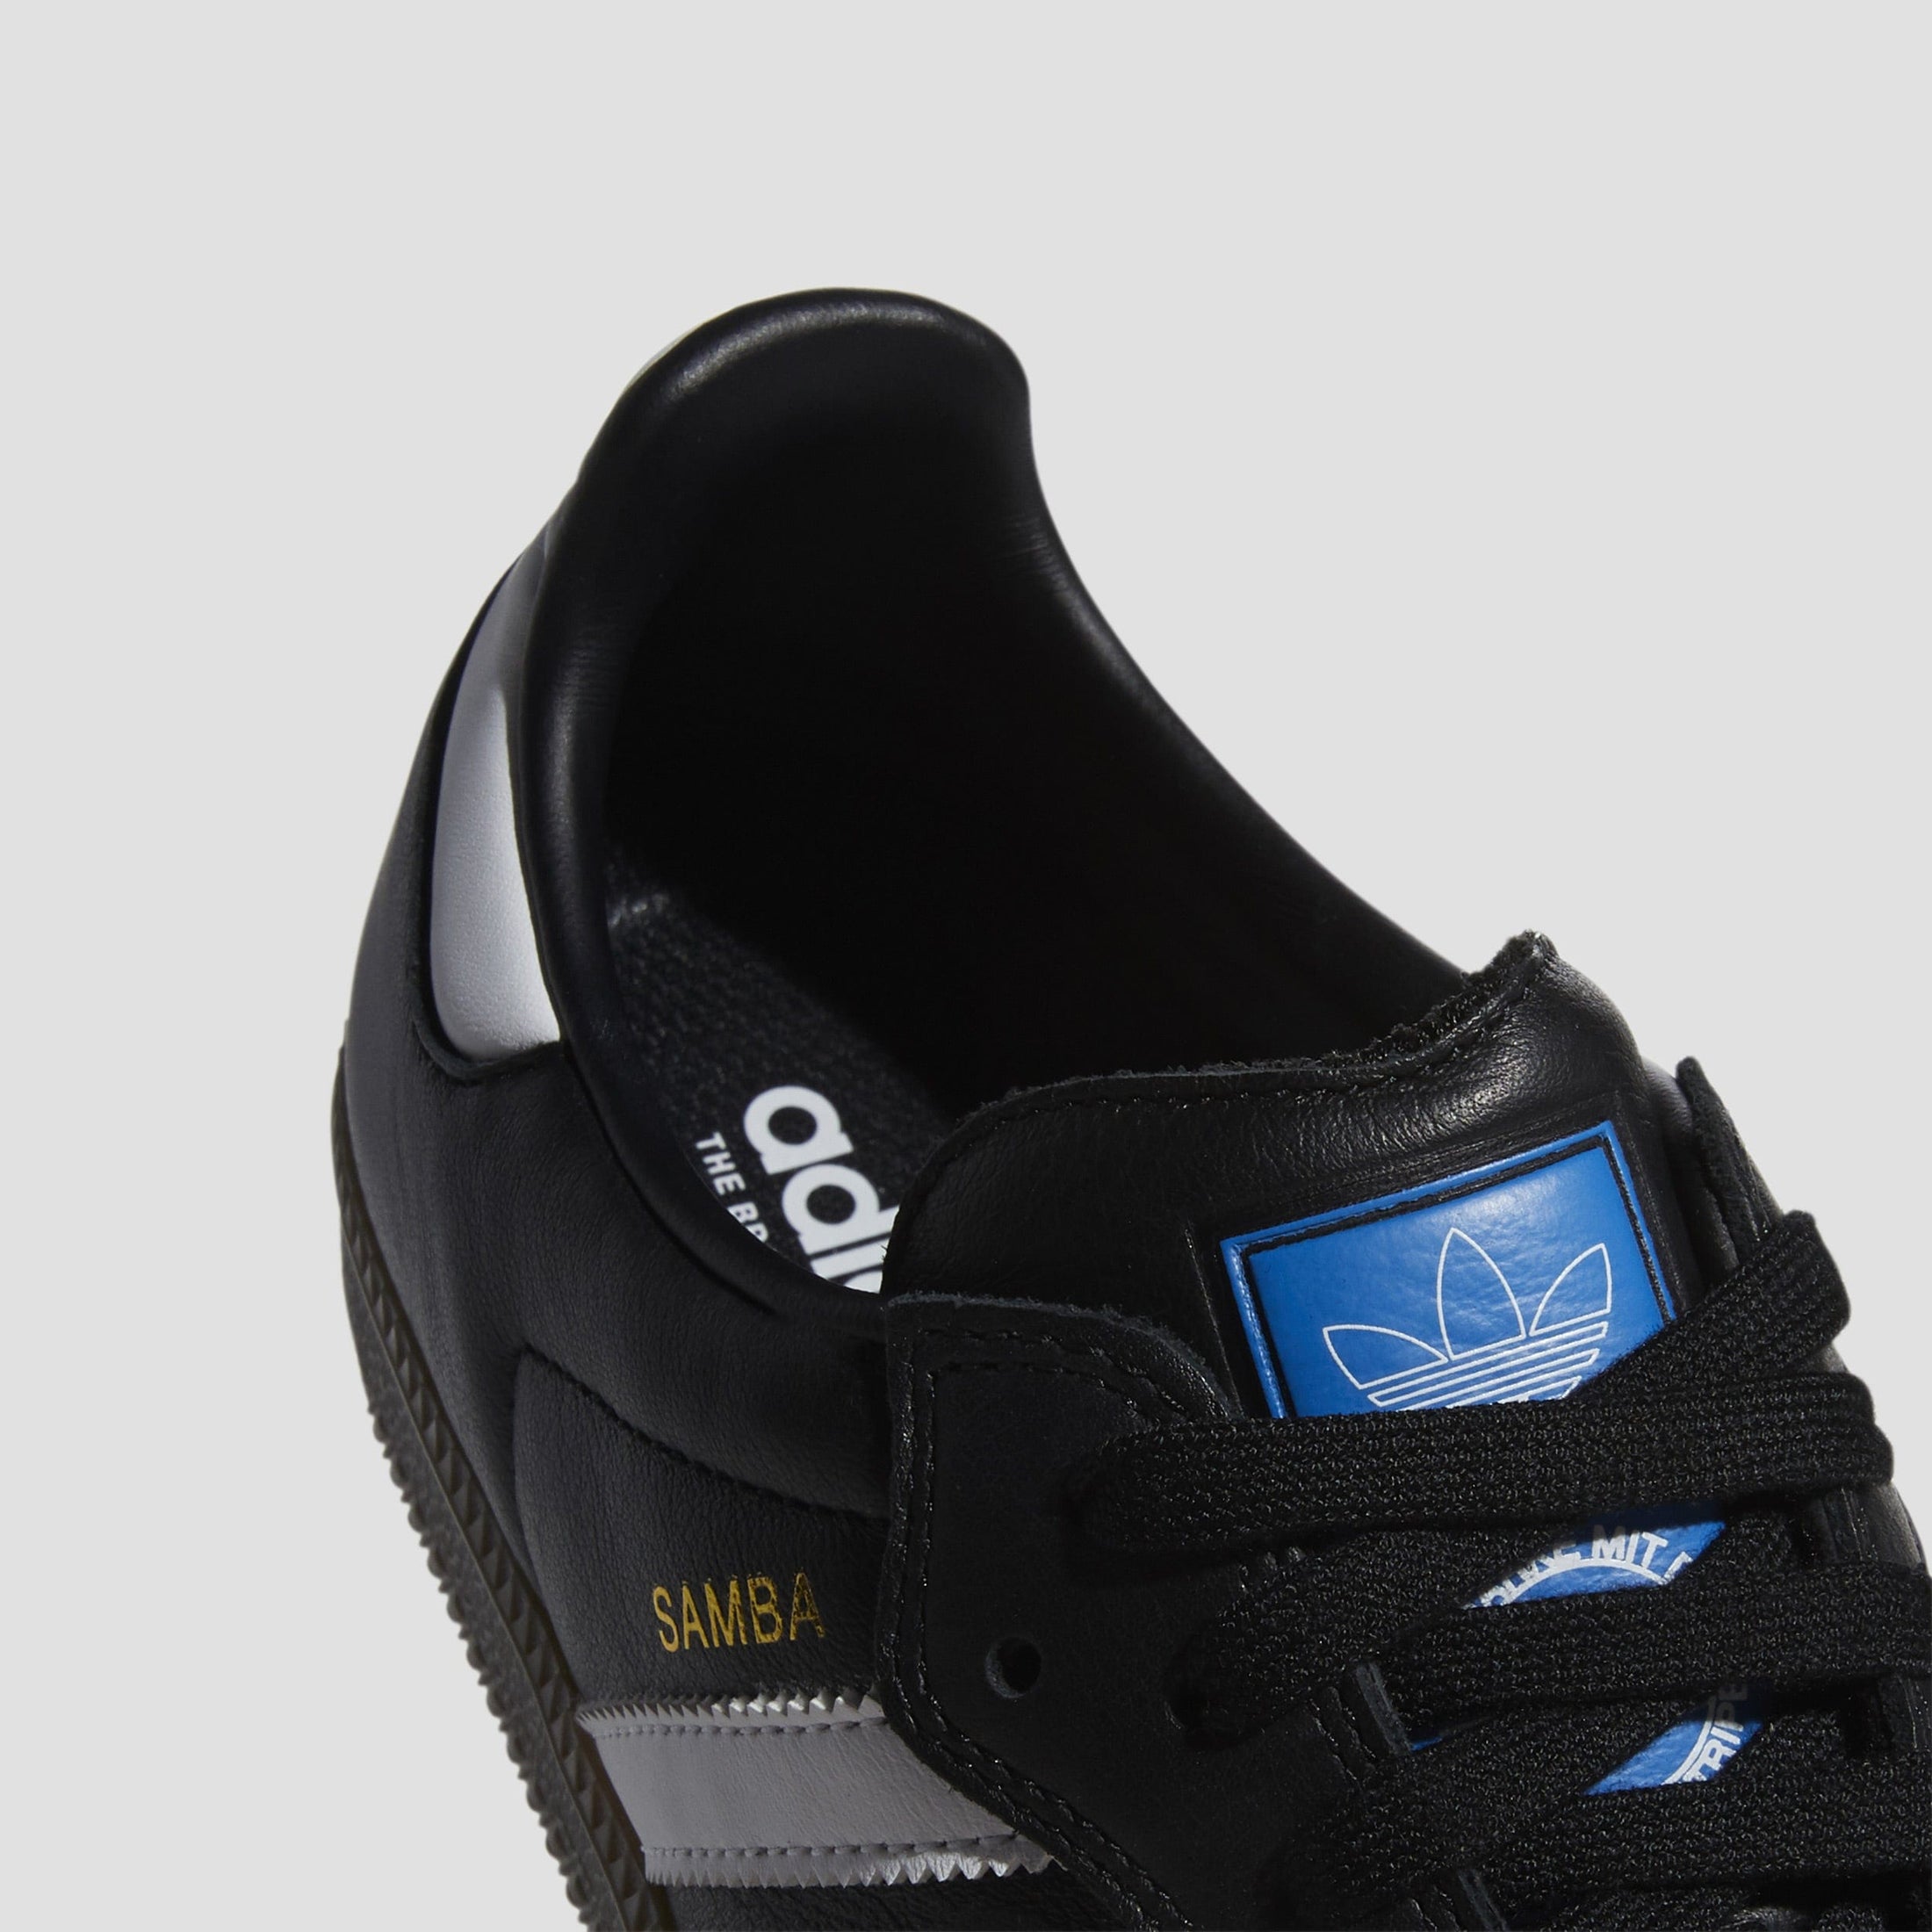 adidas Samba OG Skate Shoes Core Black / Cloud White / Gum